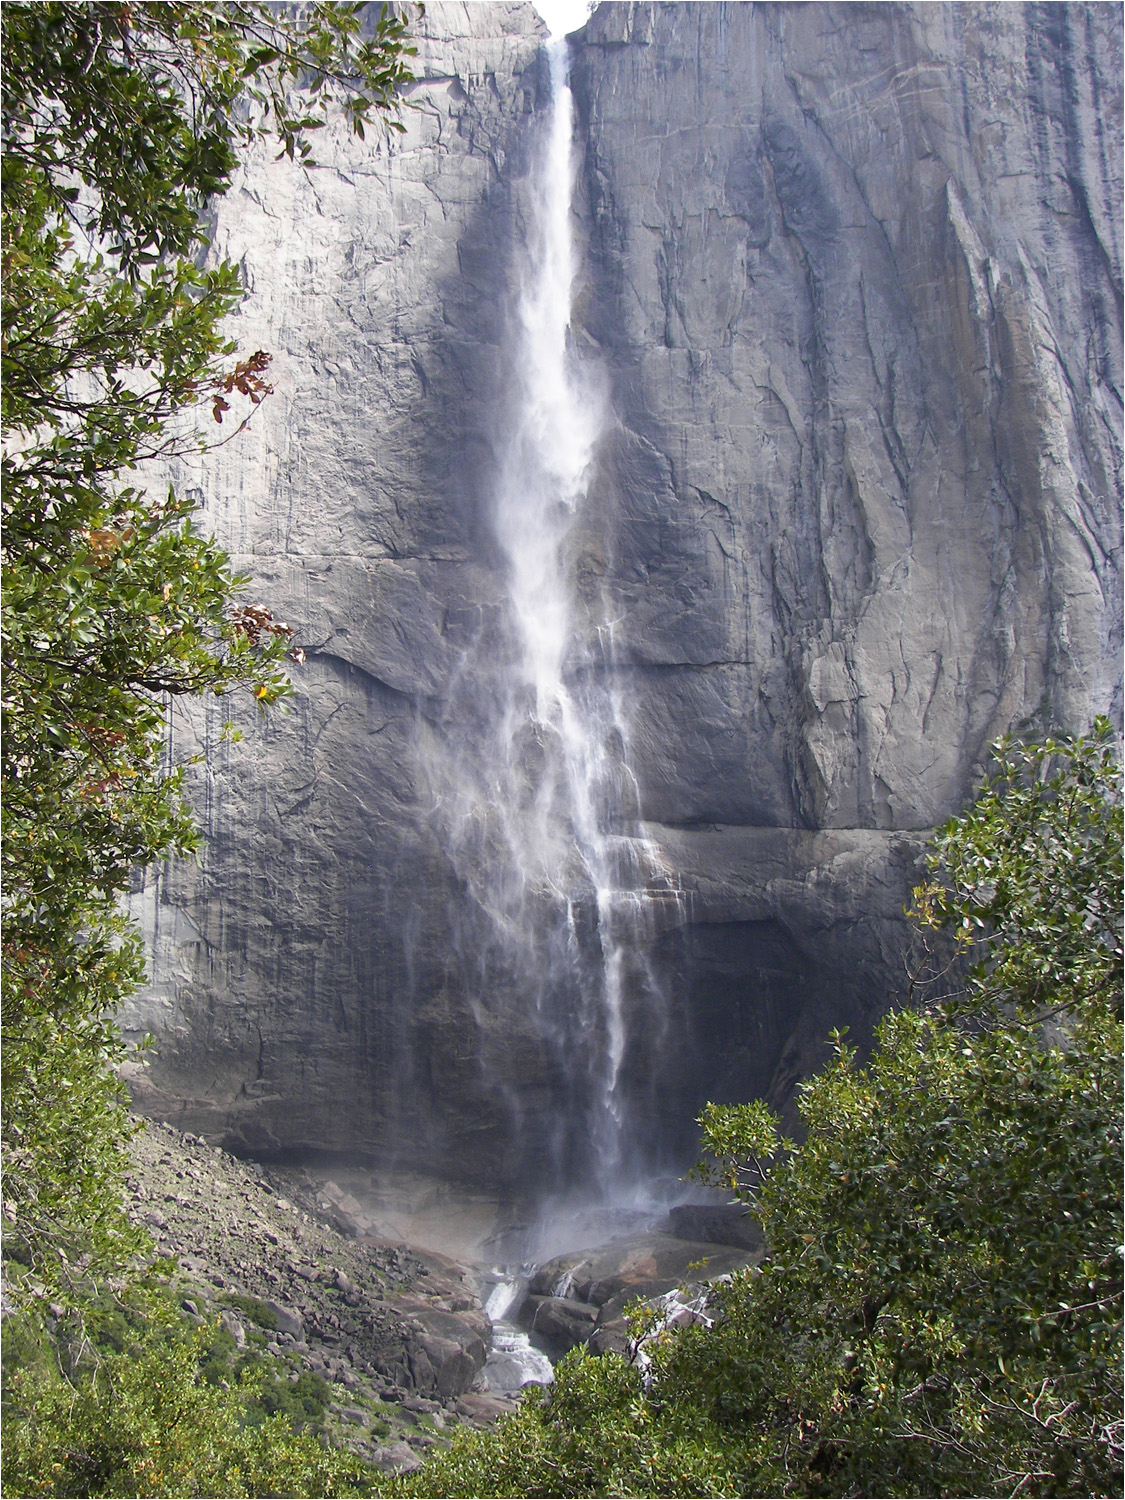 Upper Yosemite Falls Hike- First views of upper falls from trail